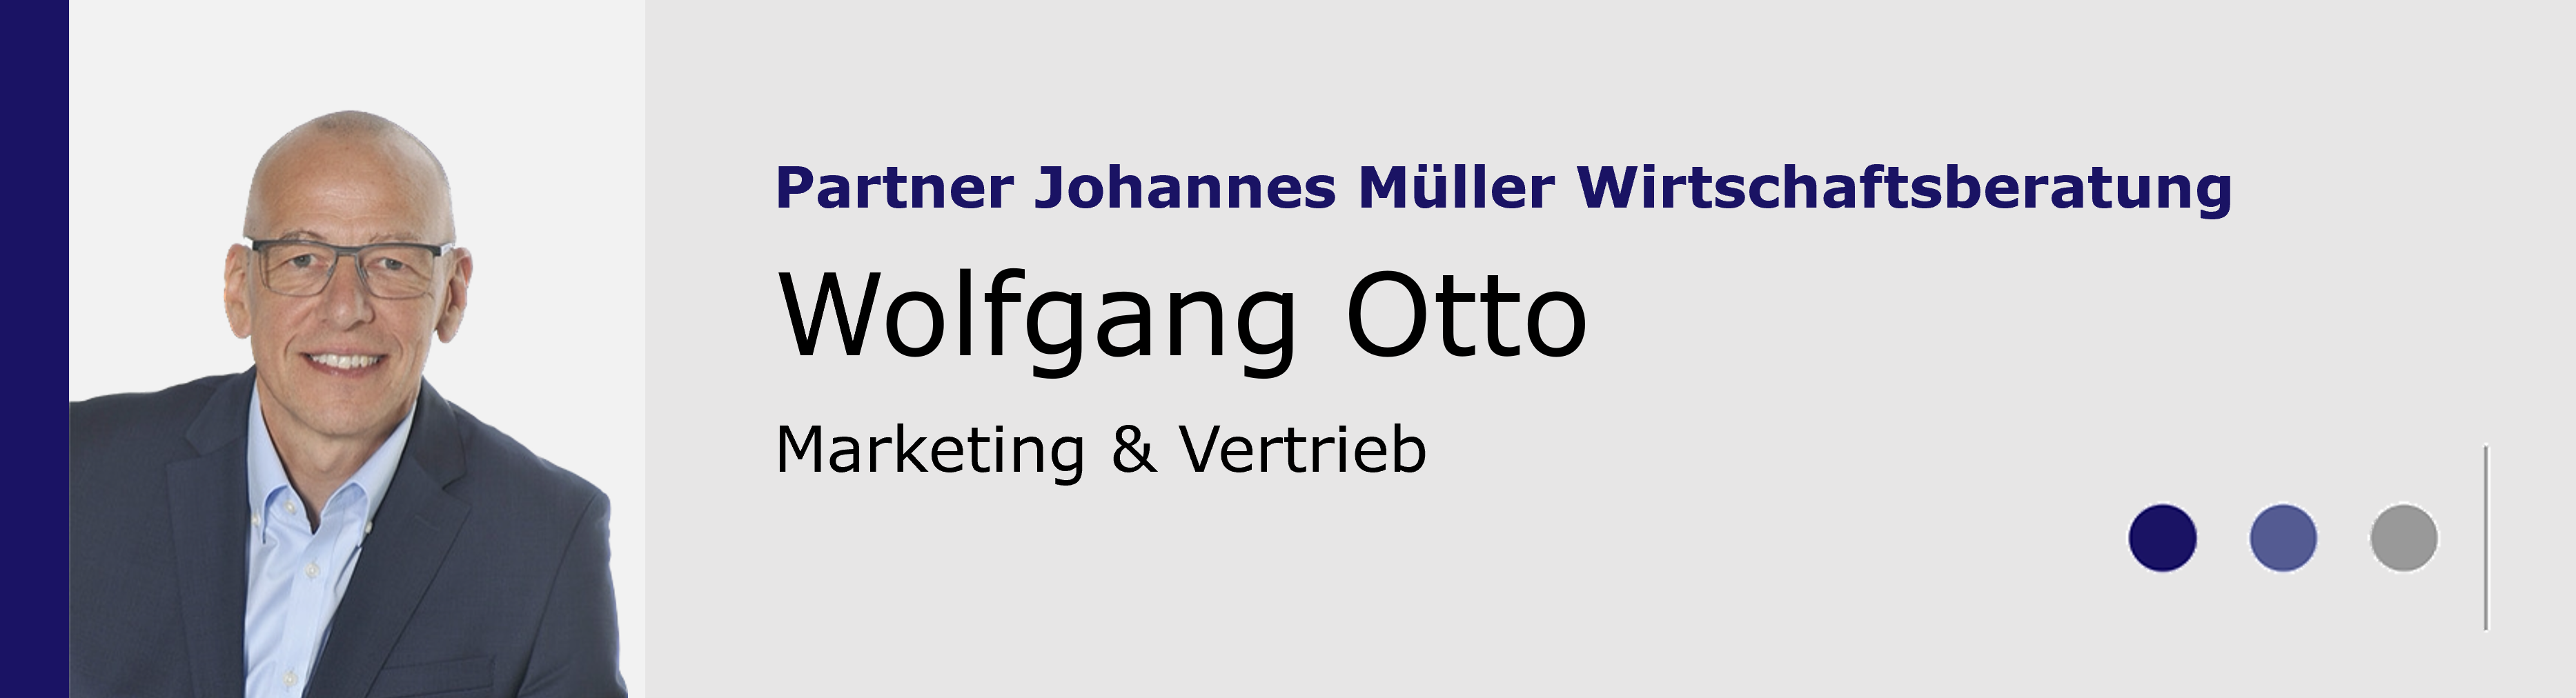 Partner Wolfgang Otto blog